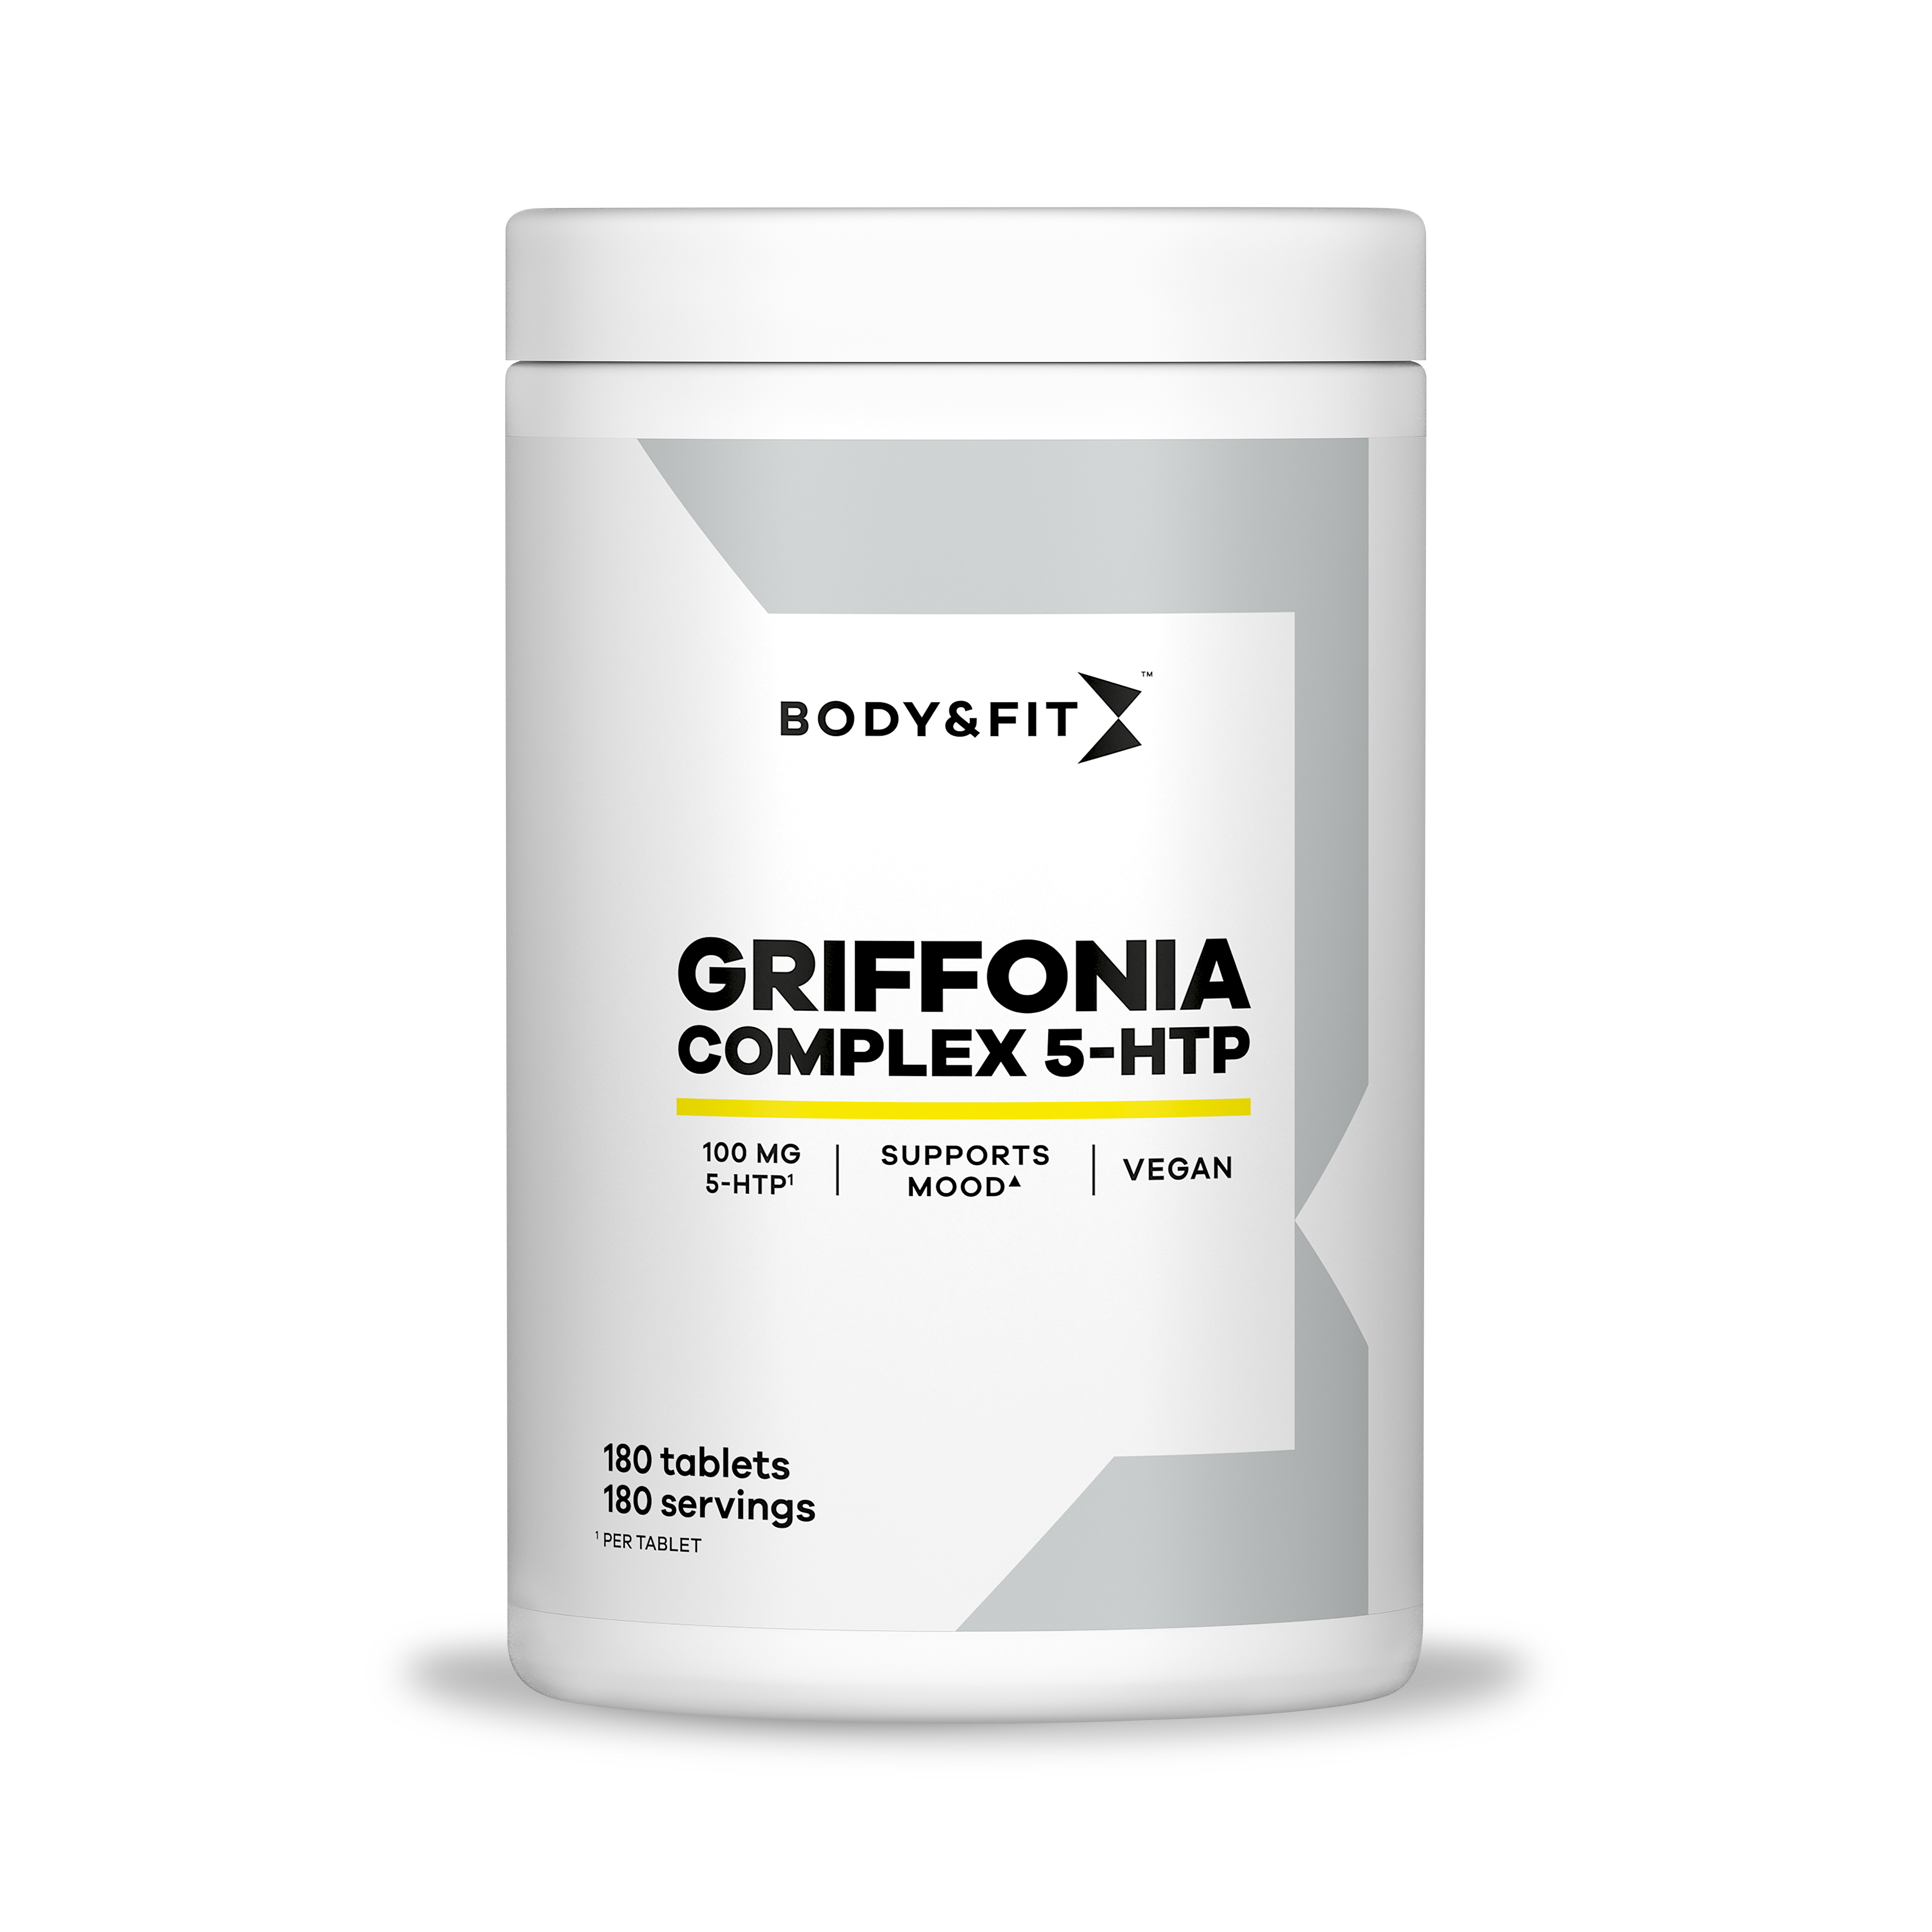 GRIFFONIA COMPLEX 5-HTP